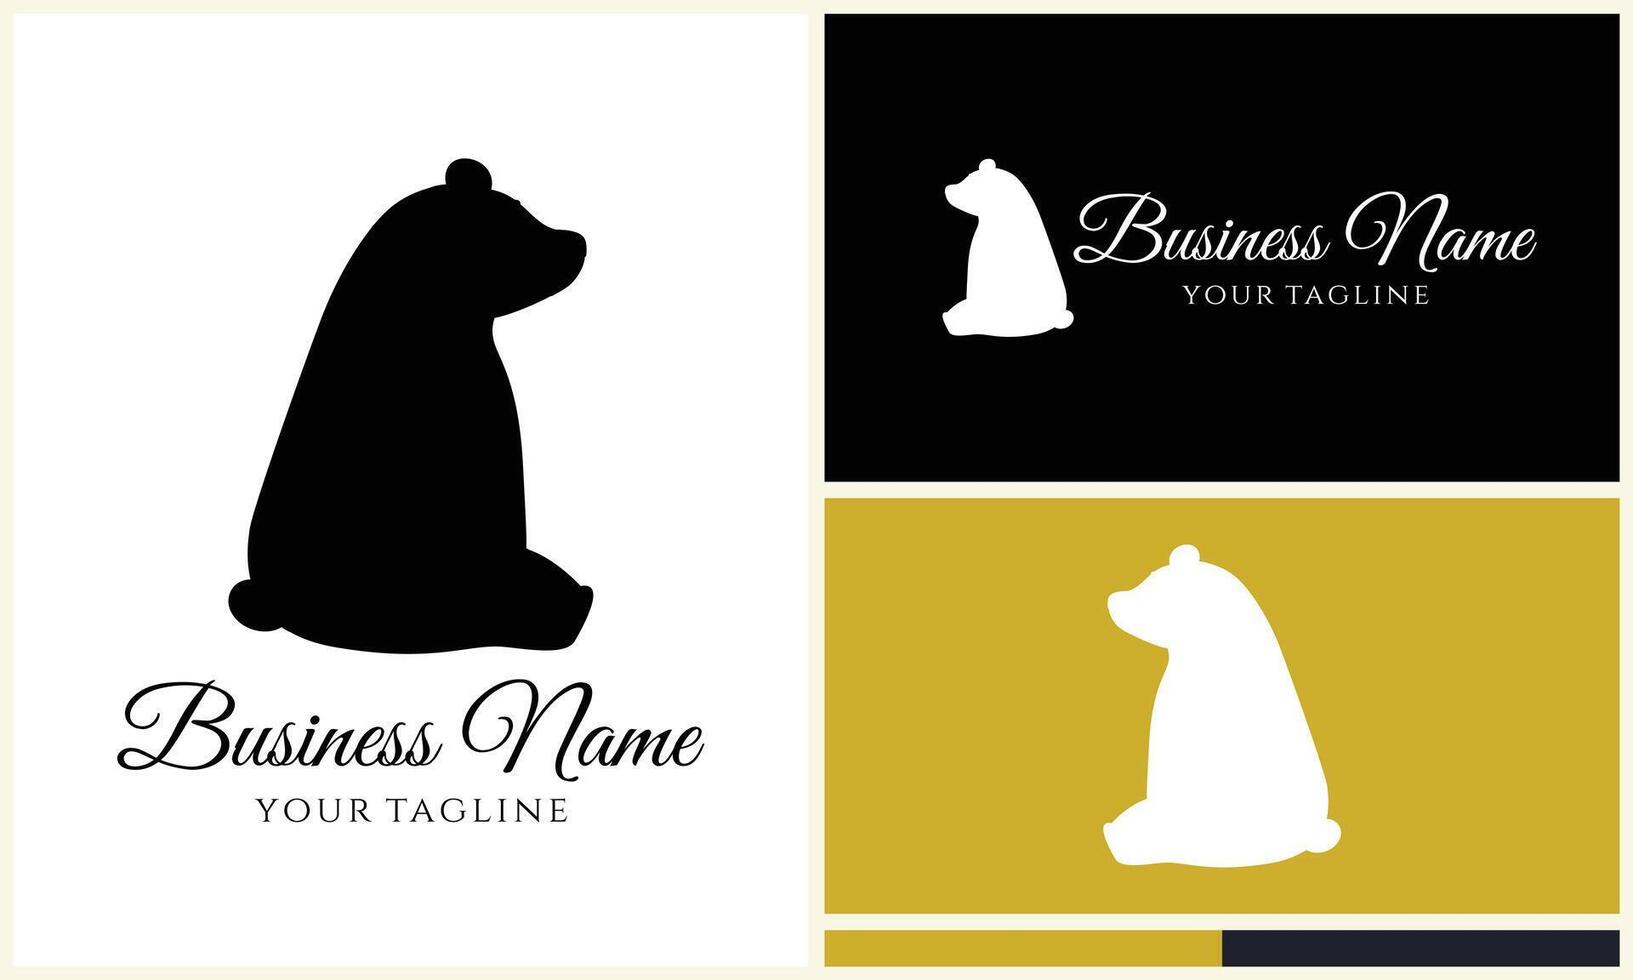 silhouette vector bear logo template